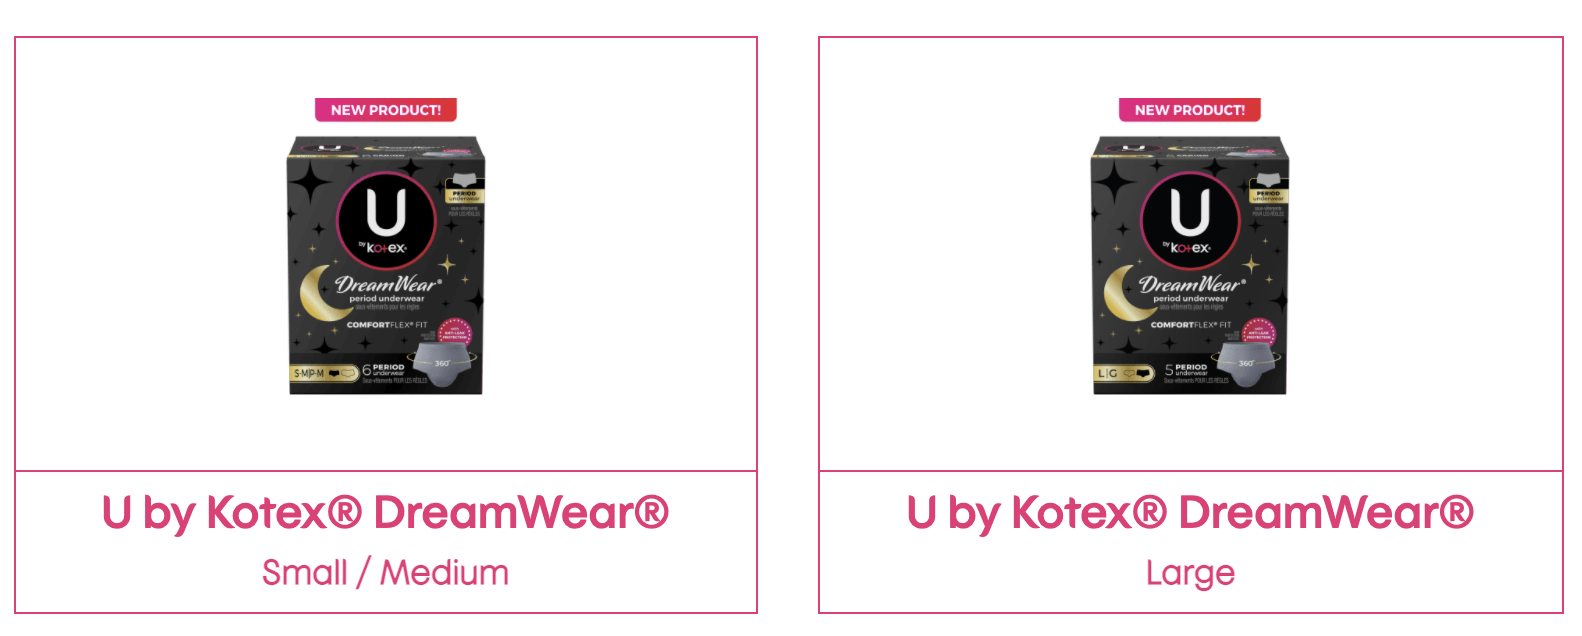 Free Kotex Dreamwear